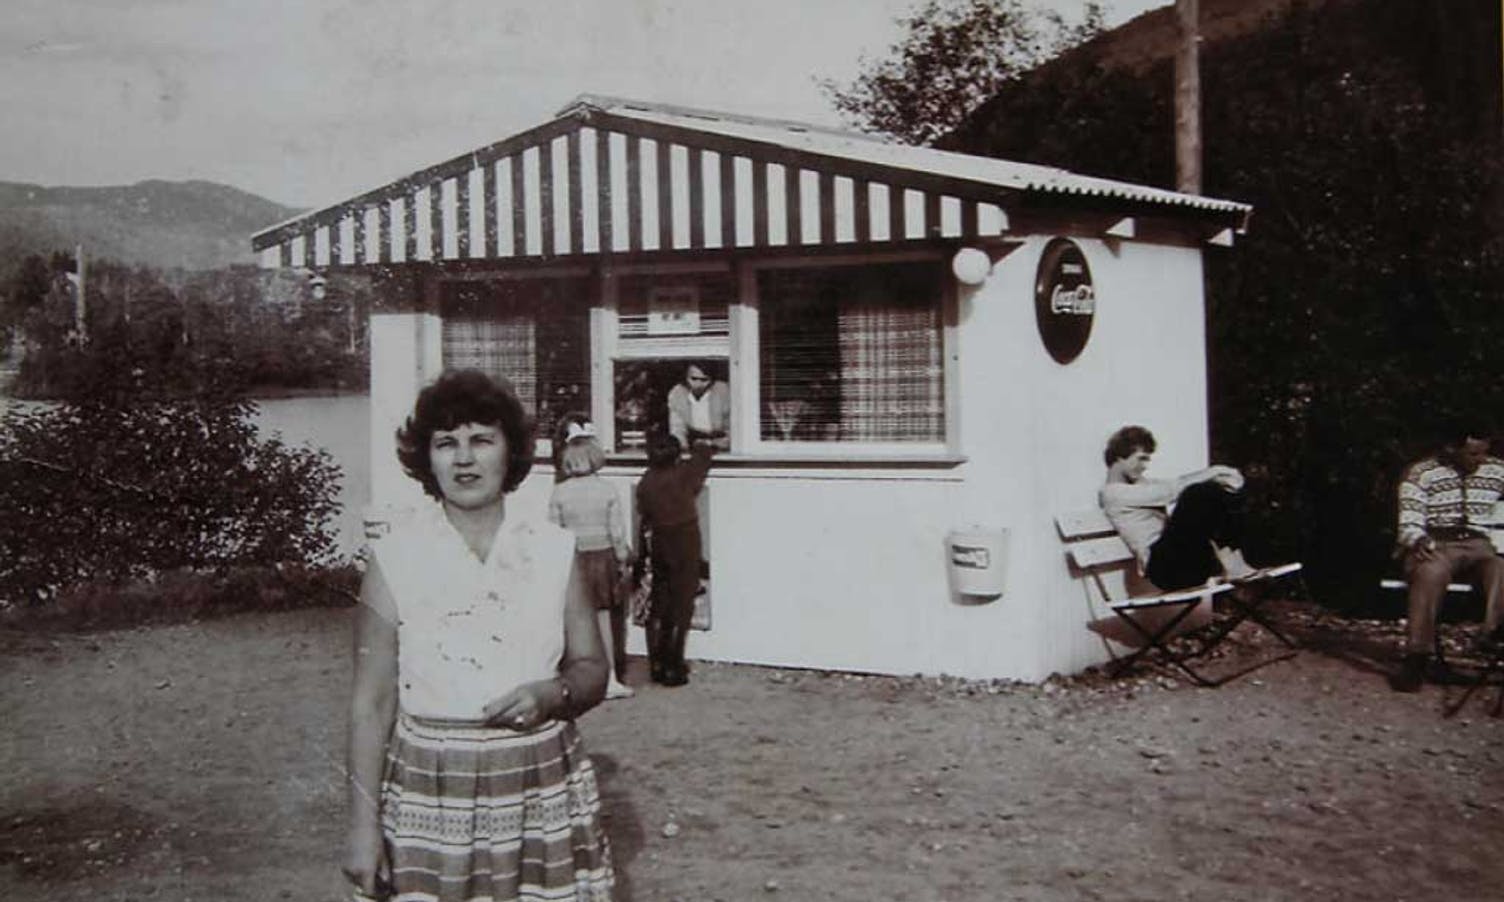 Linda si svigerbestemor Anny dreiv kiosk til midten på 70-talet. (Privat foto)